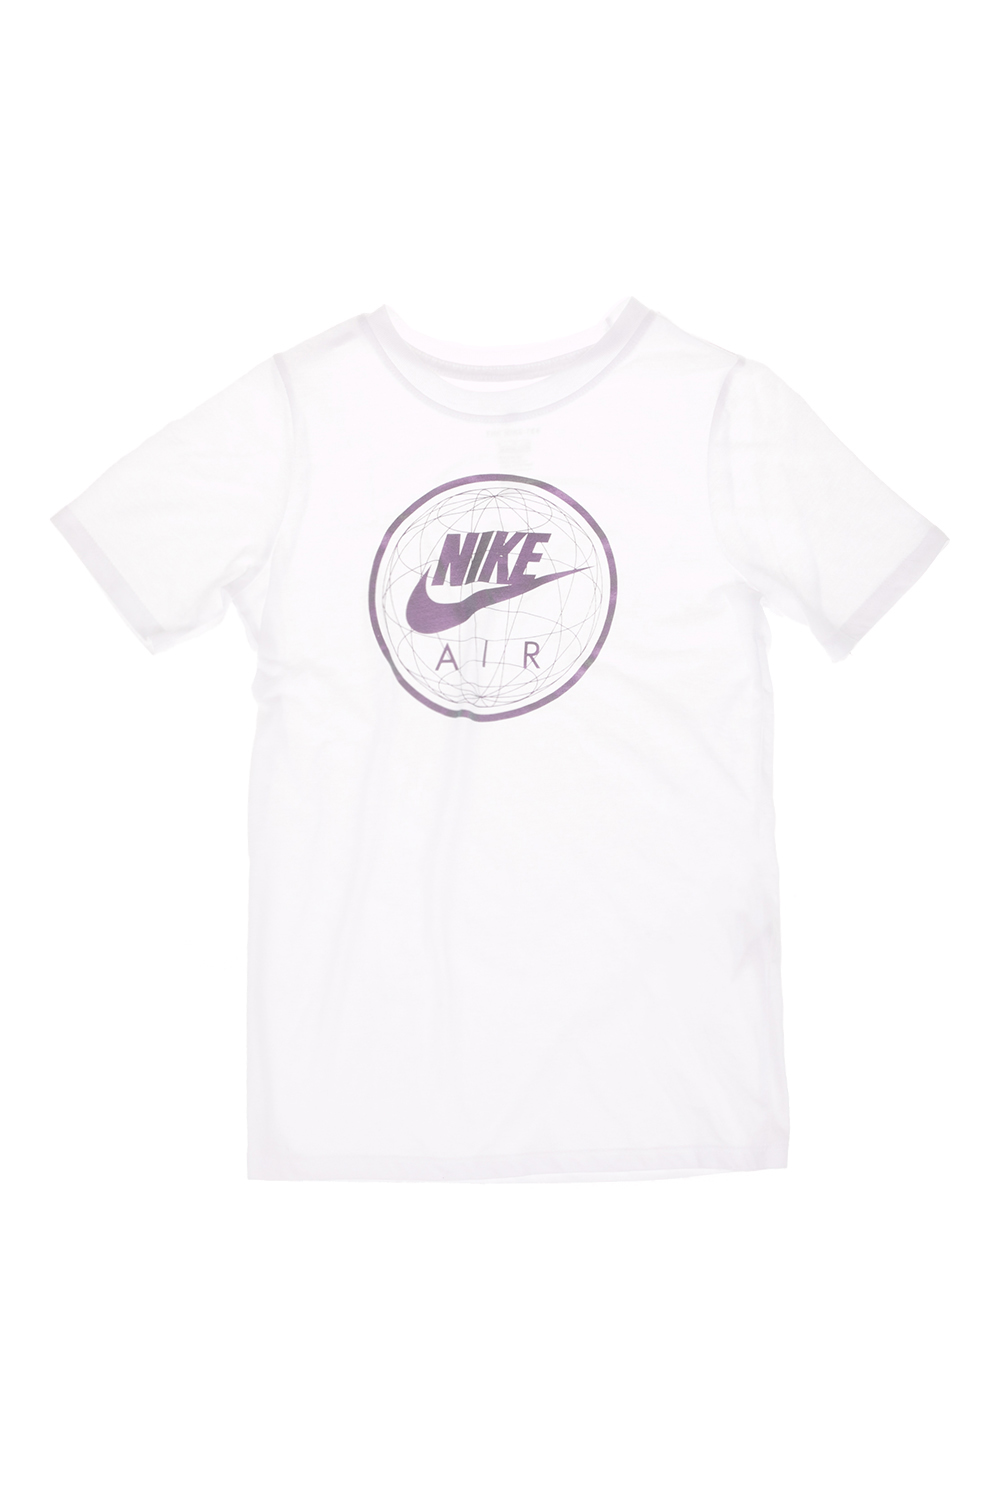 NIKE - Αγορίστικο t-shirt NIKE AIR WORLD λευκό Παιδικά/Boys/Ρούχα/Μπλούζες Κοντομάνικες-Αμάνικες